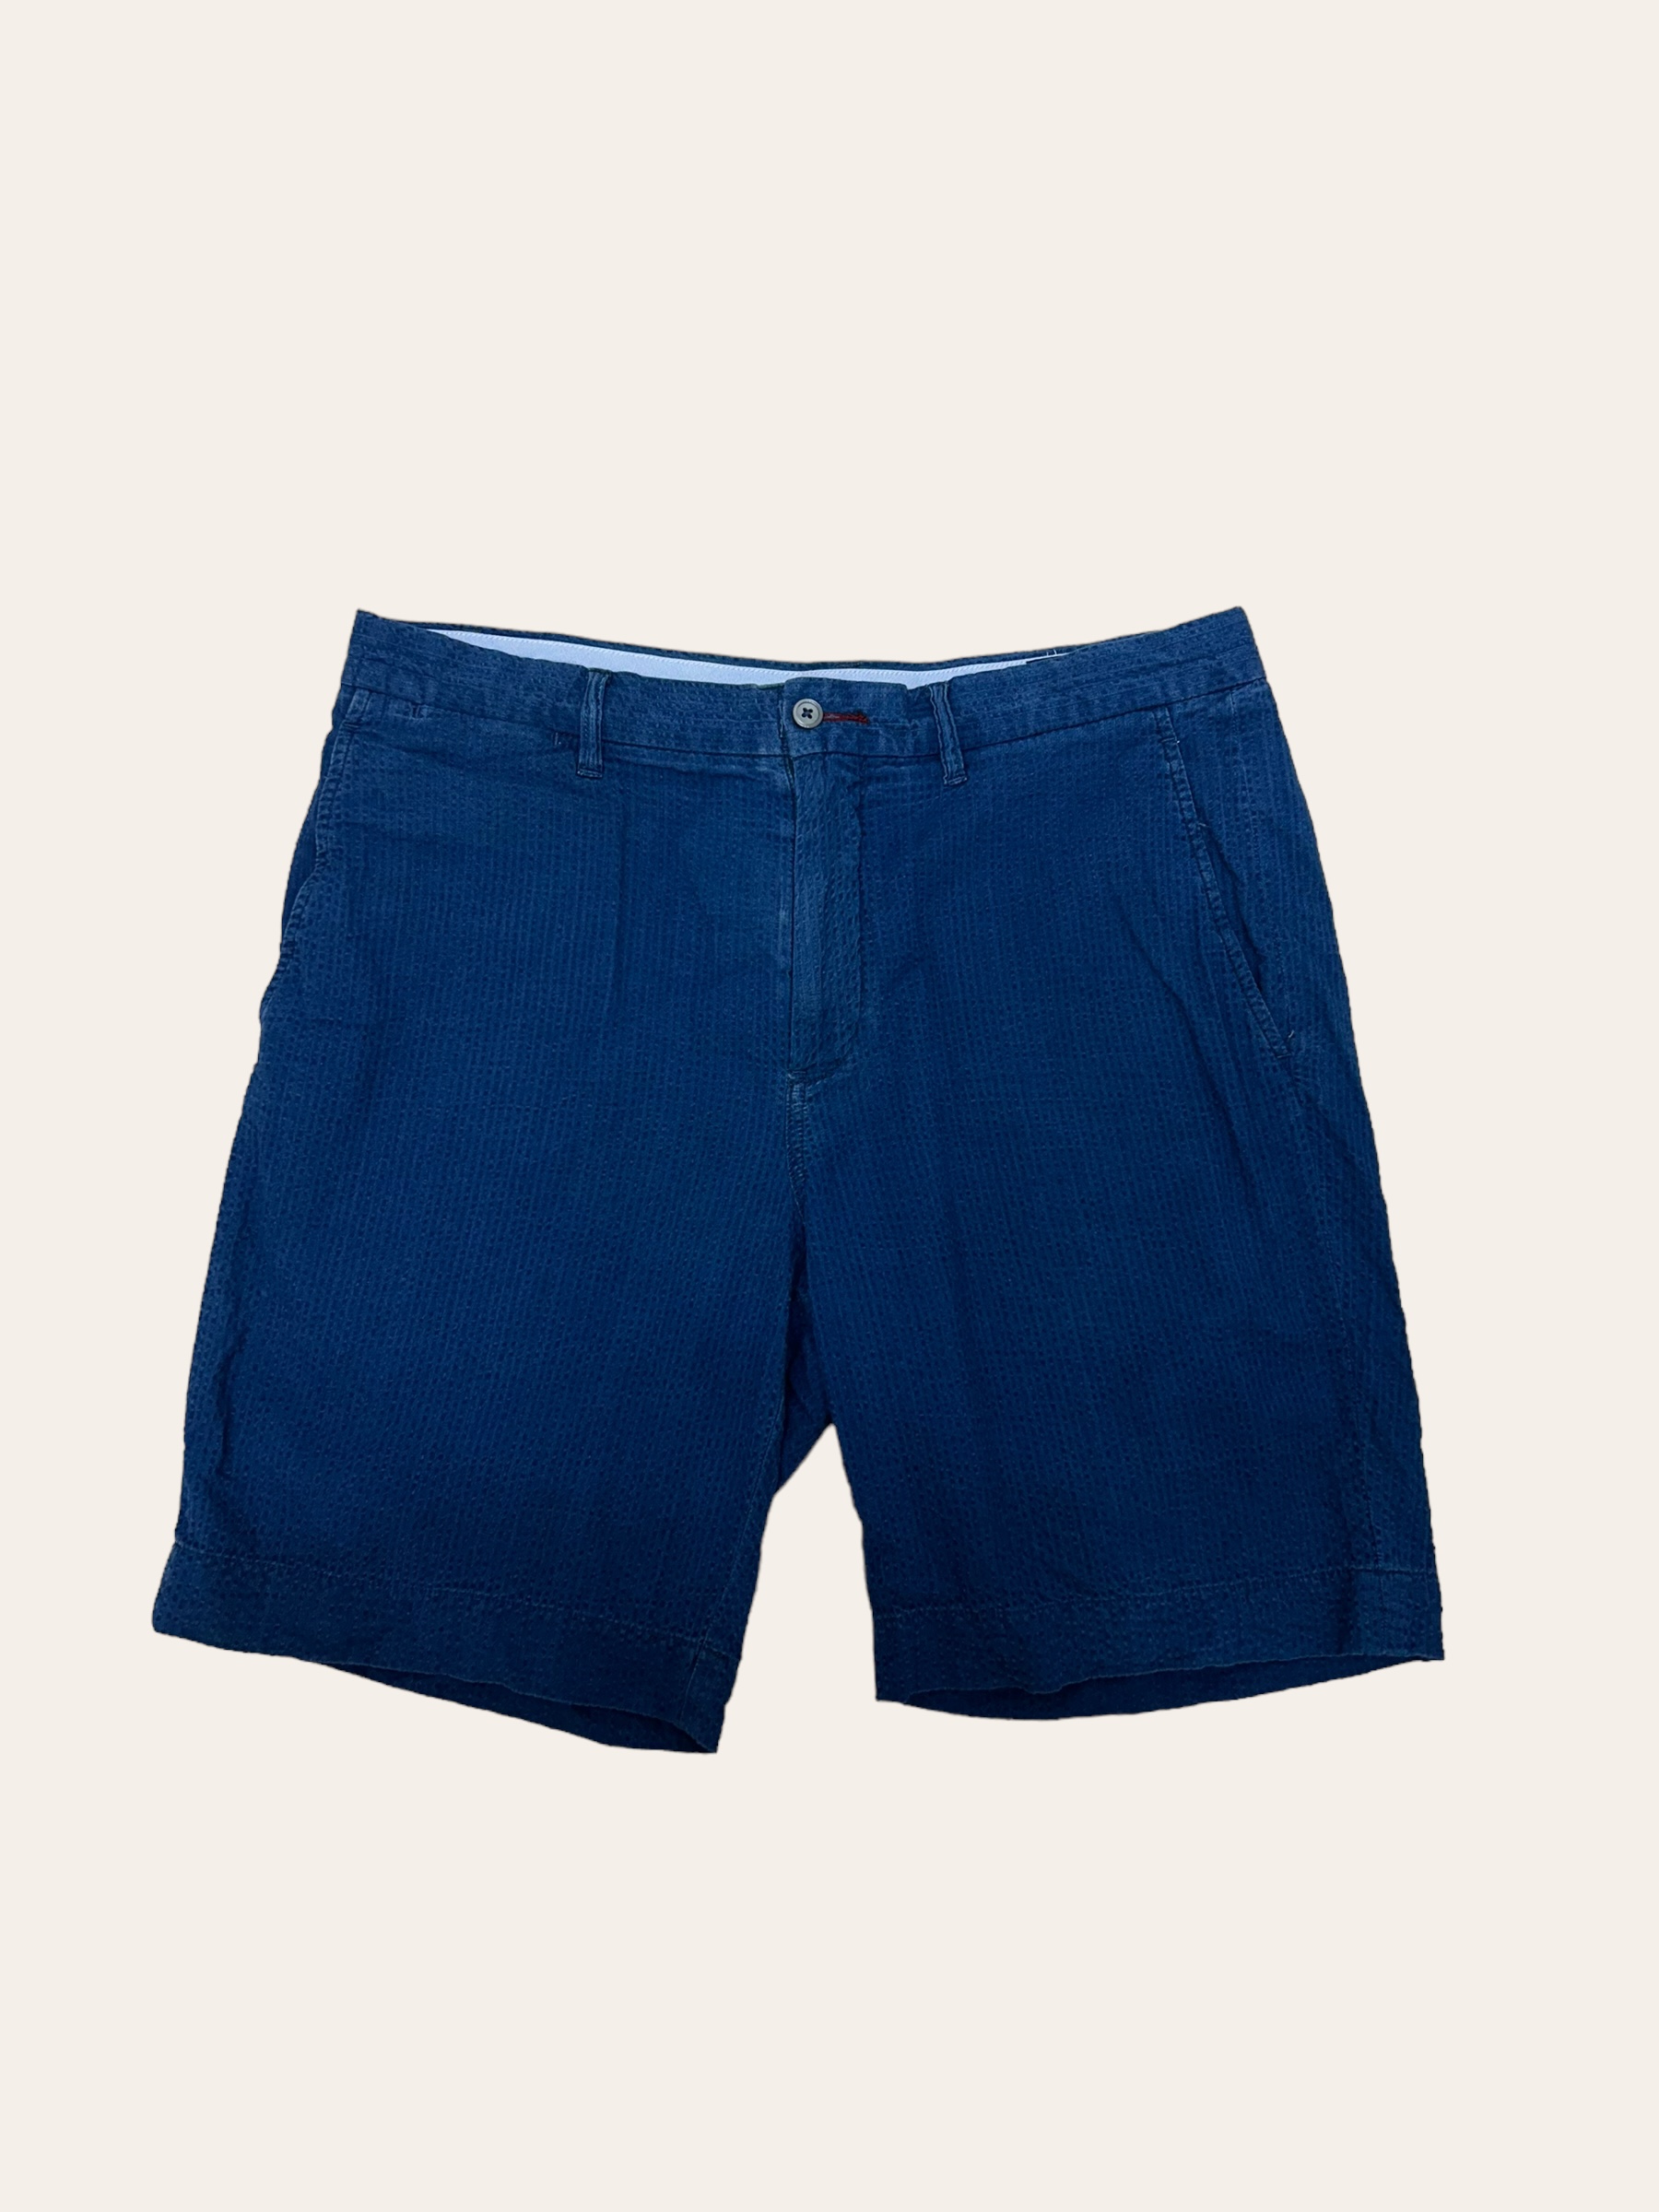 Polo ralph lauren indigo blue seersucker shorts 33